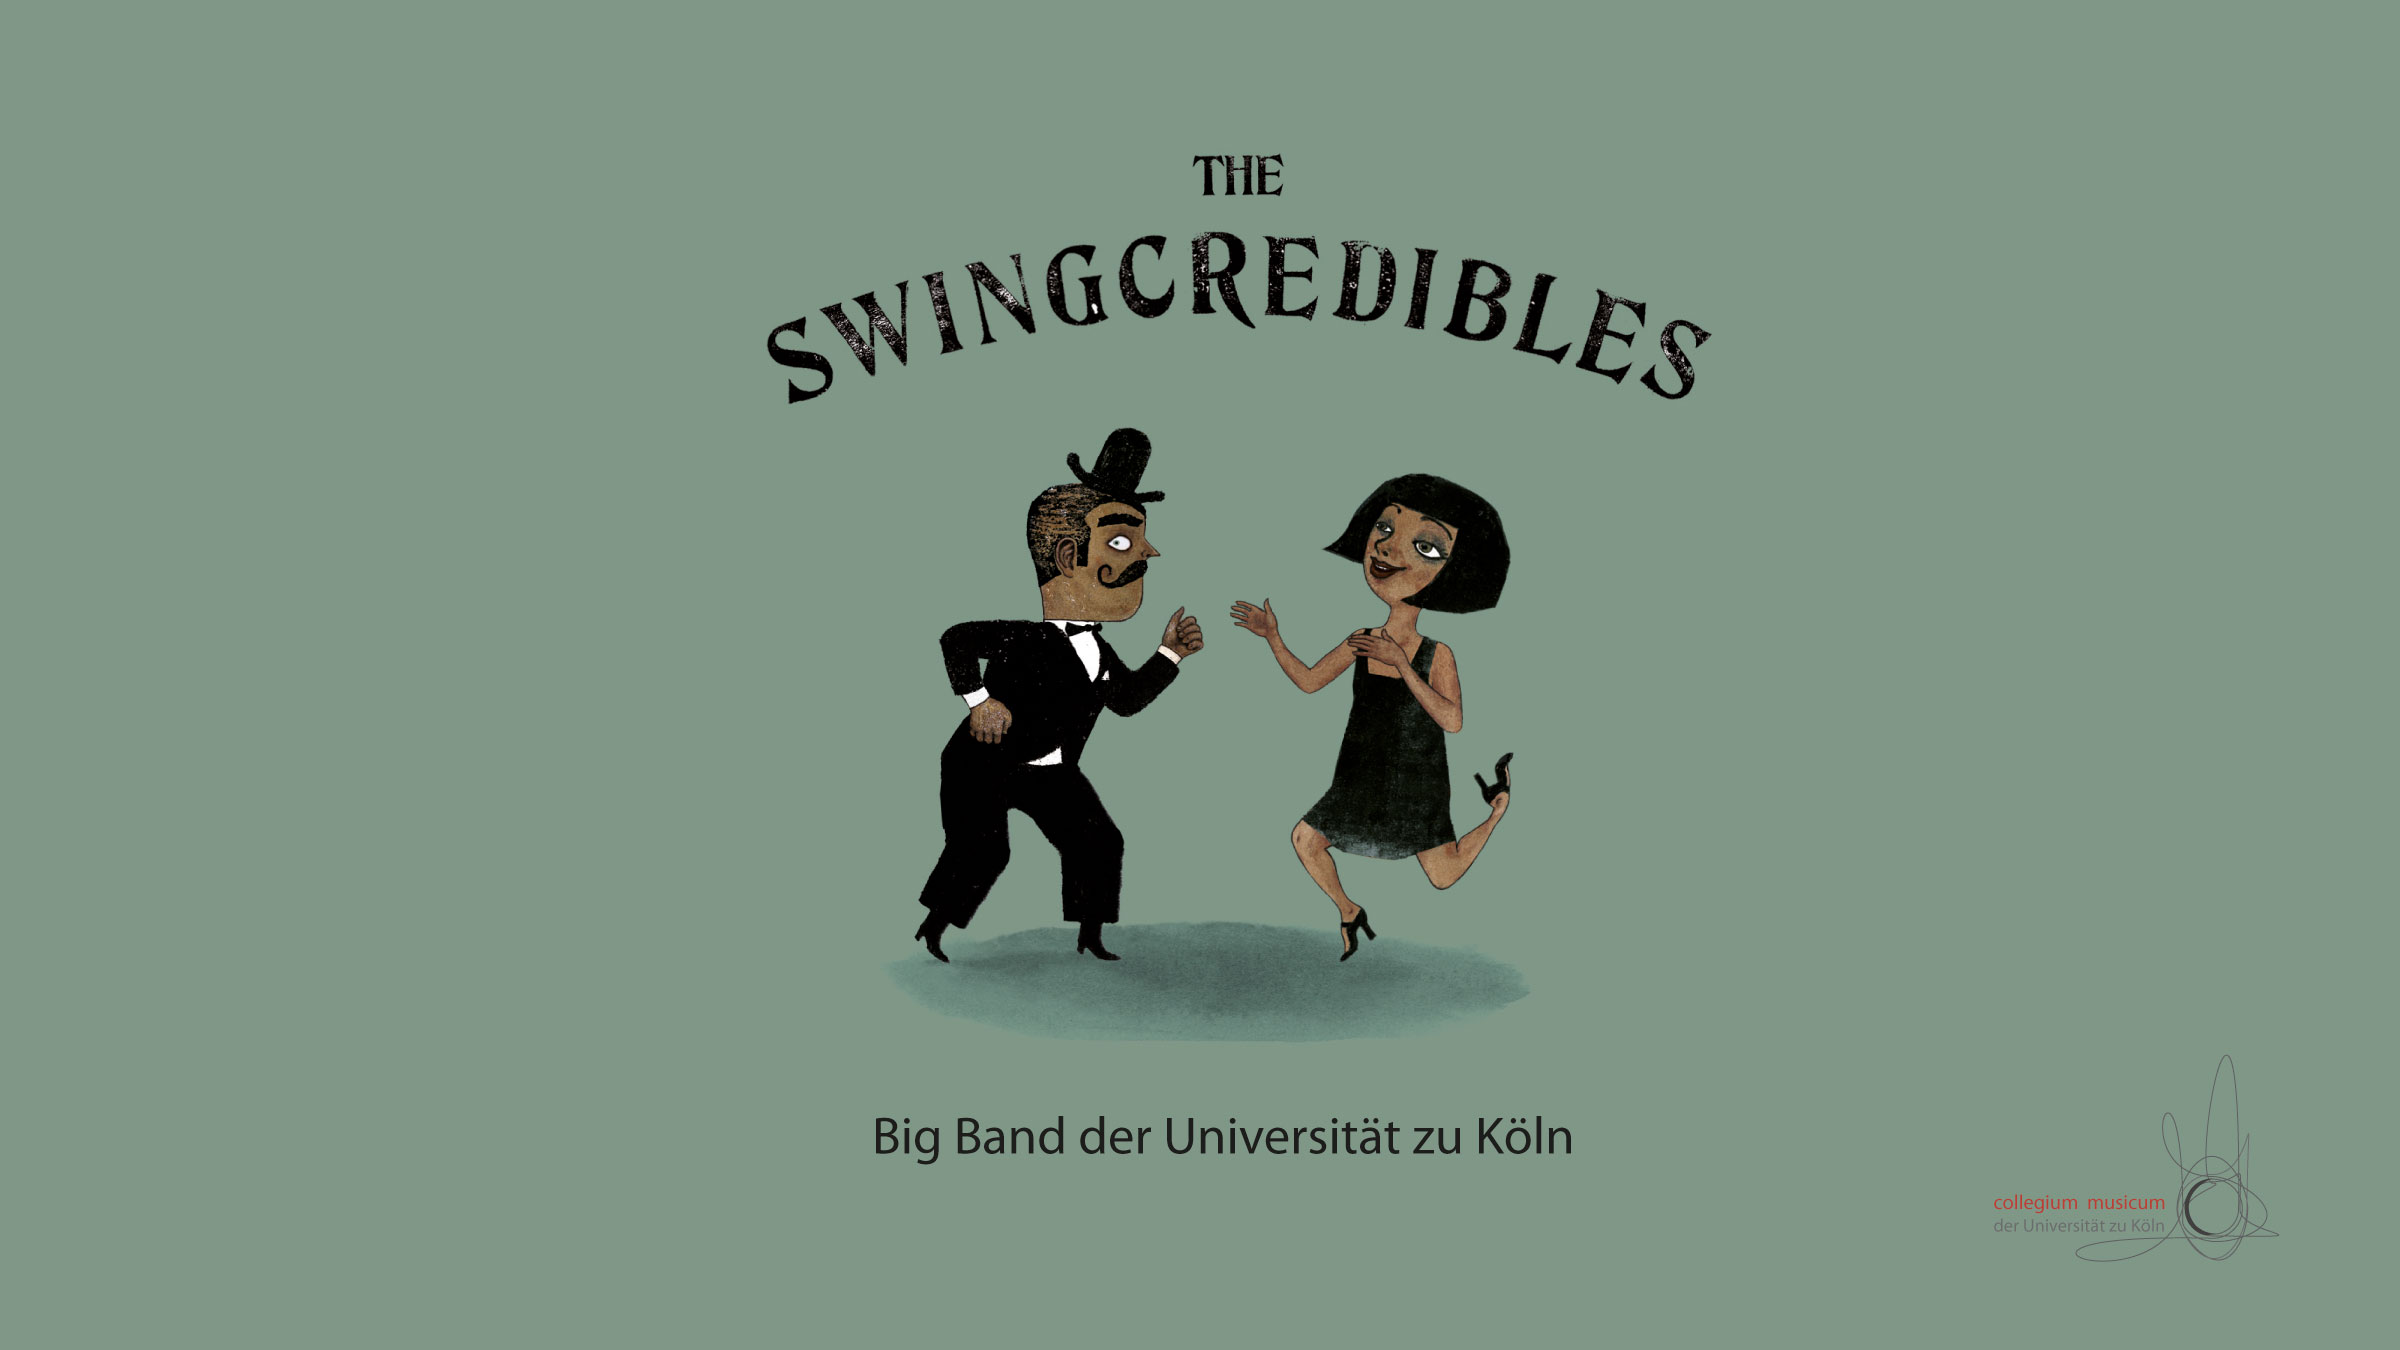 The Swingcredibles. Big Band der Universität zu Köln